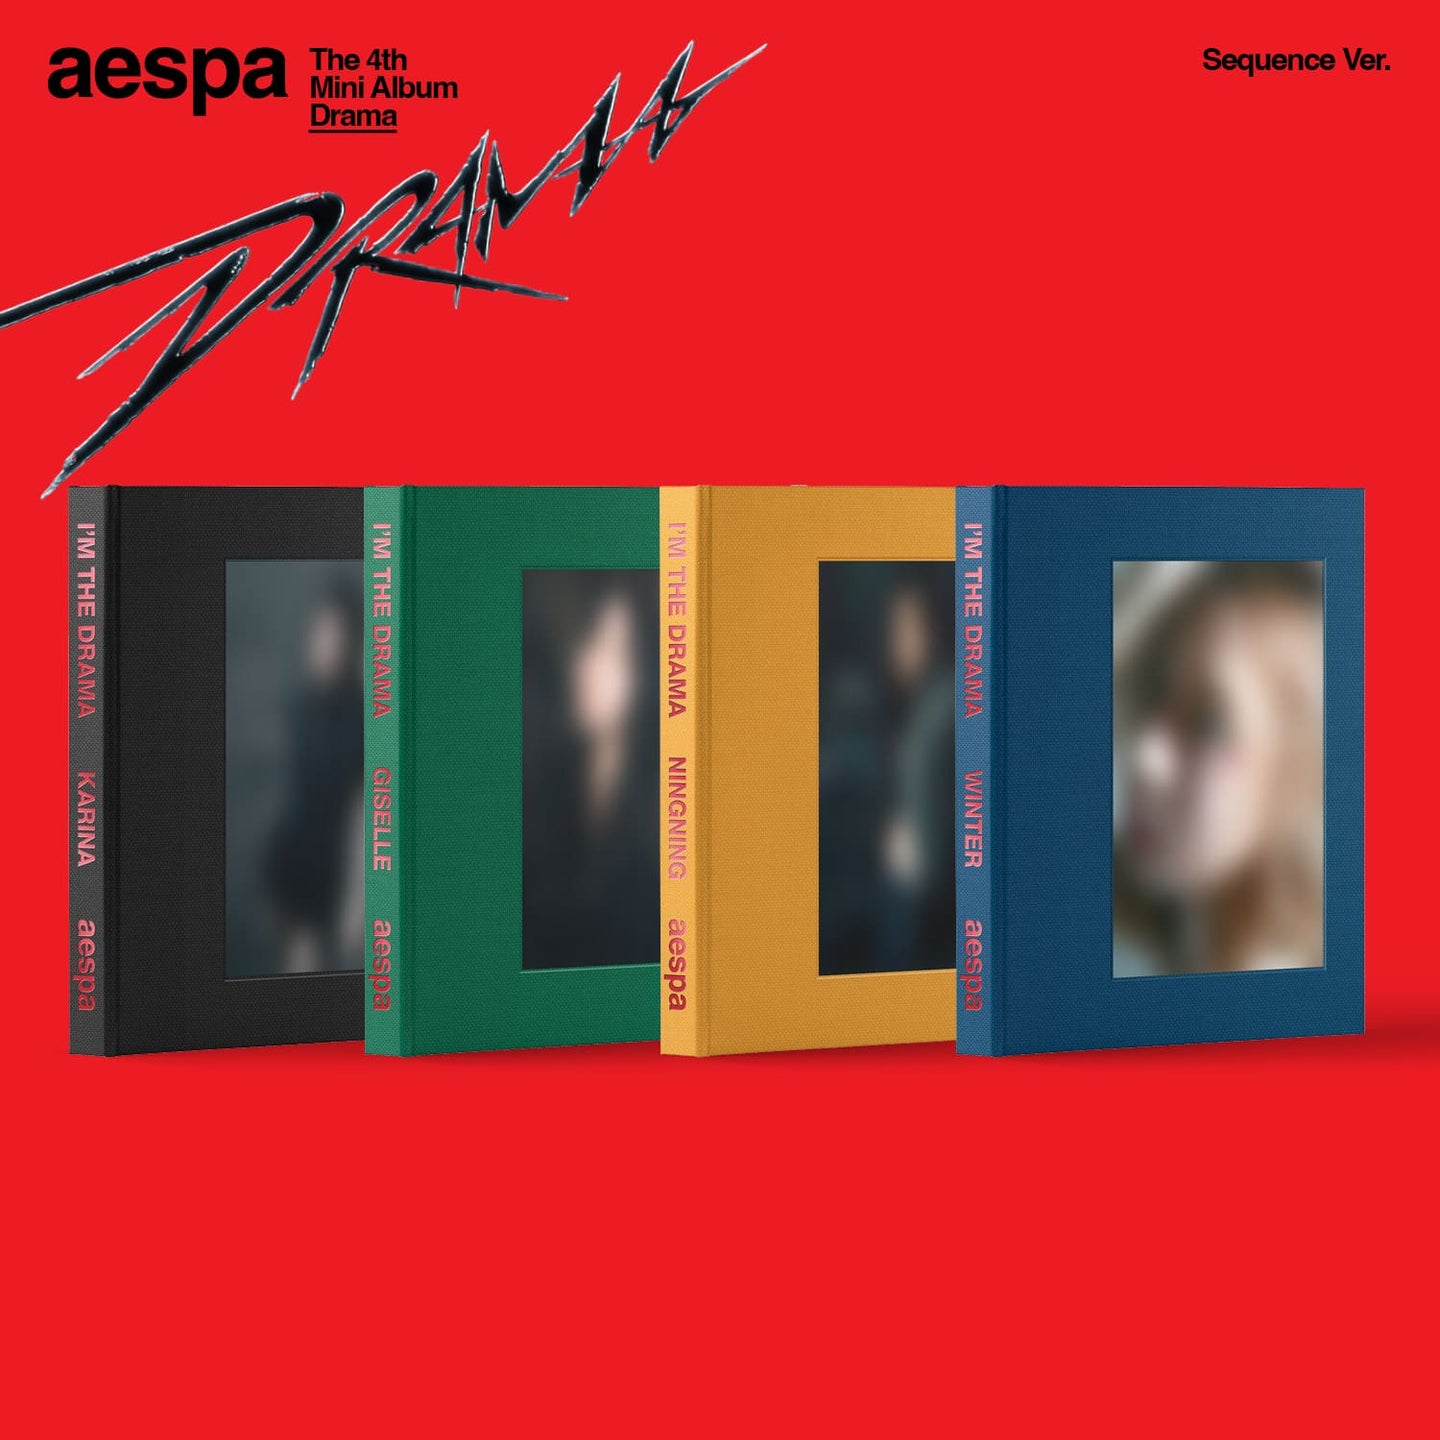 aespa Mini Album Vol. 4 – Drama (Sequence Ver.) (Random)